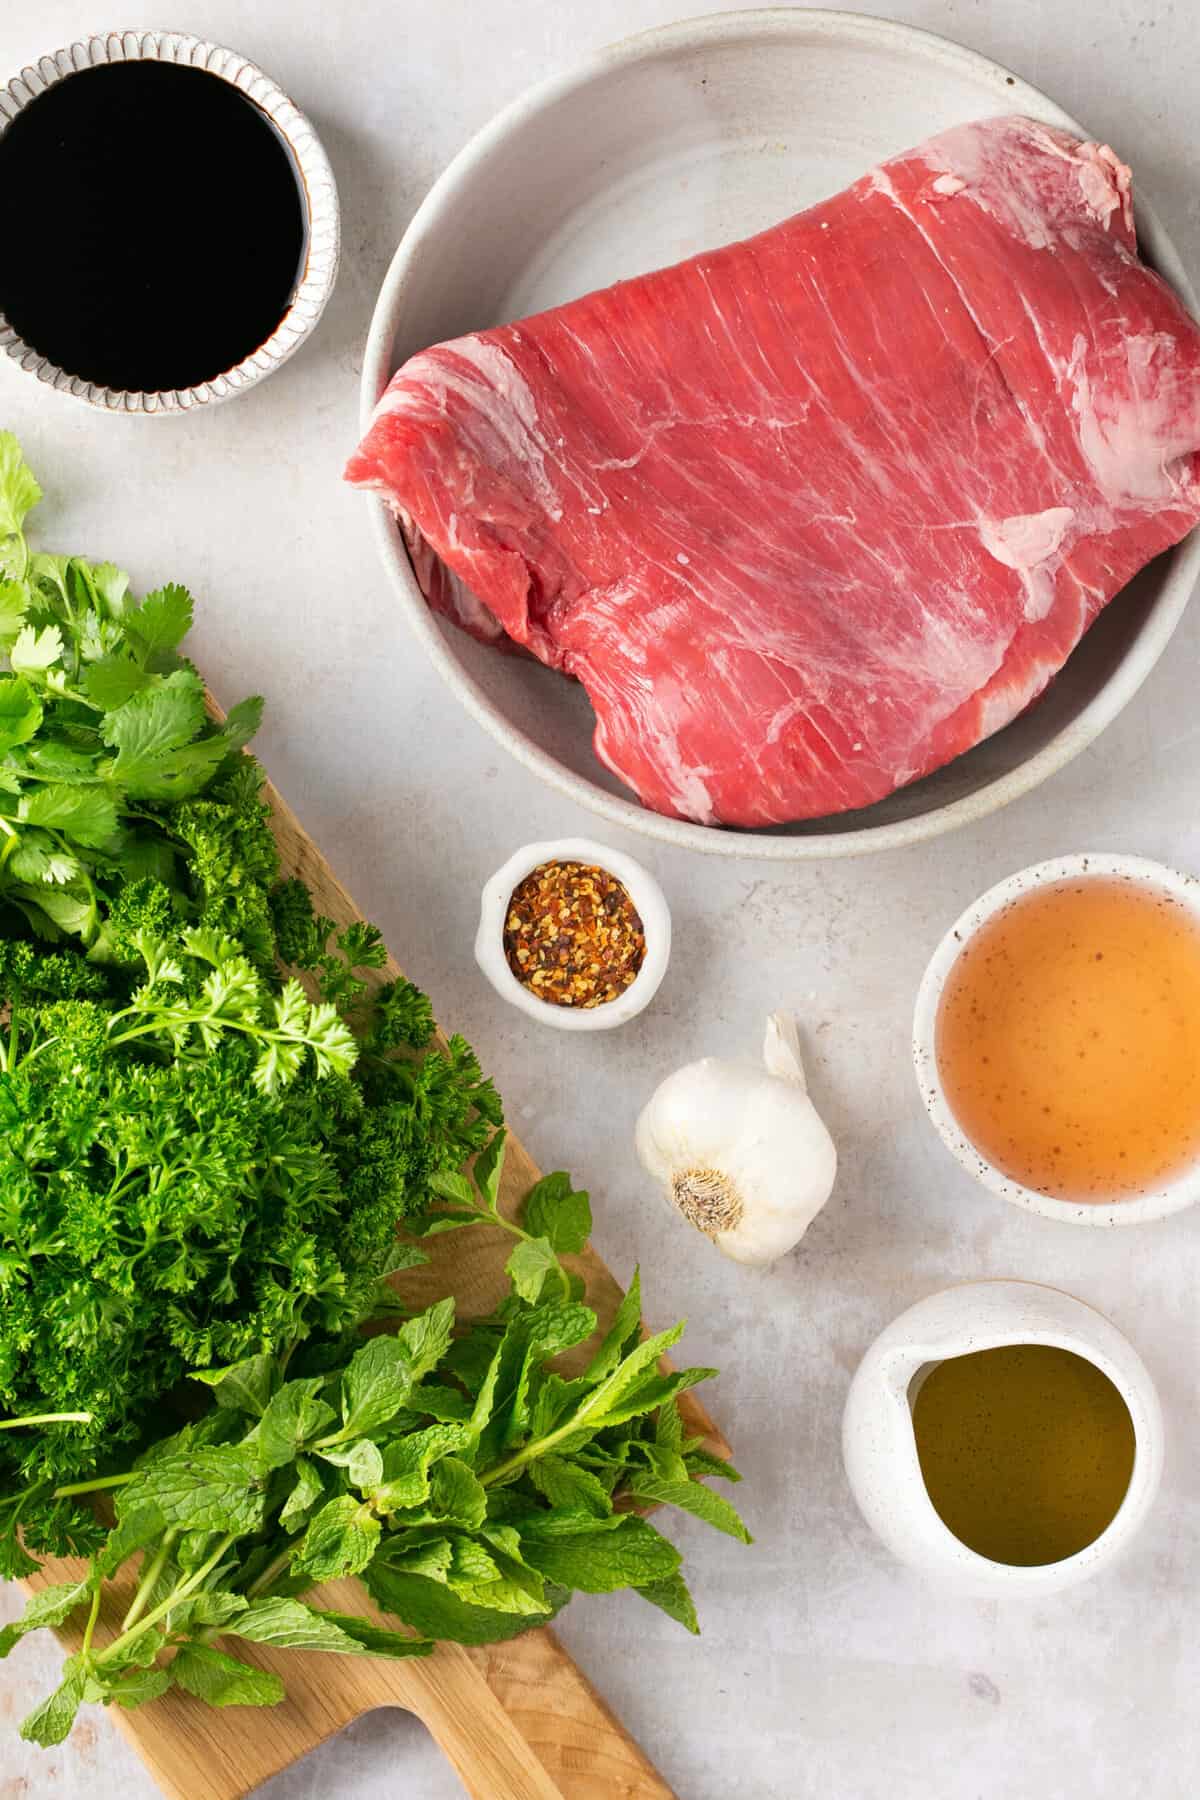 Ingredients needed for making bavette steak and chimichurri sauce including fresh herbs, garlic, olive oil and balsamic vinegar.